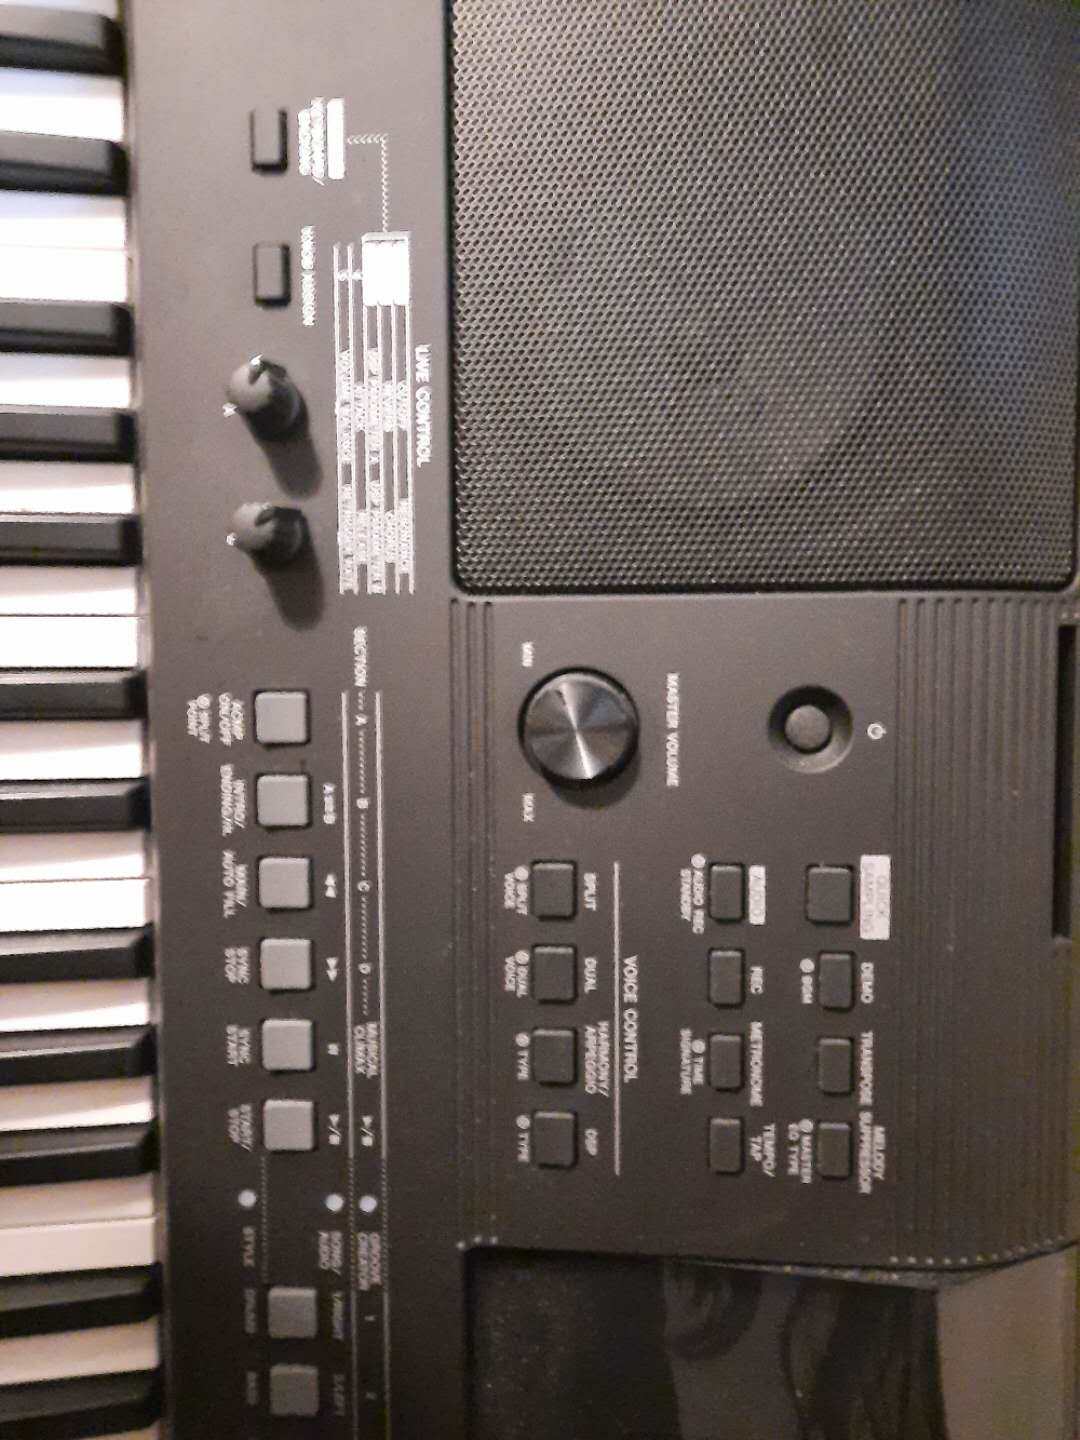 Yamaha PSR E-463电子琴